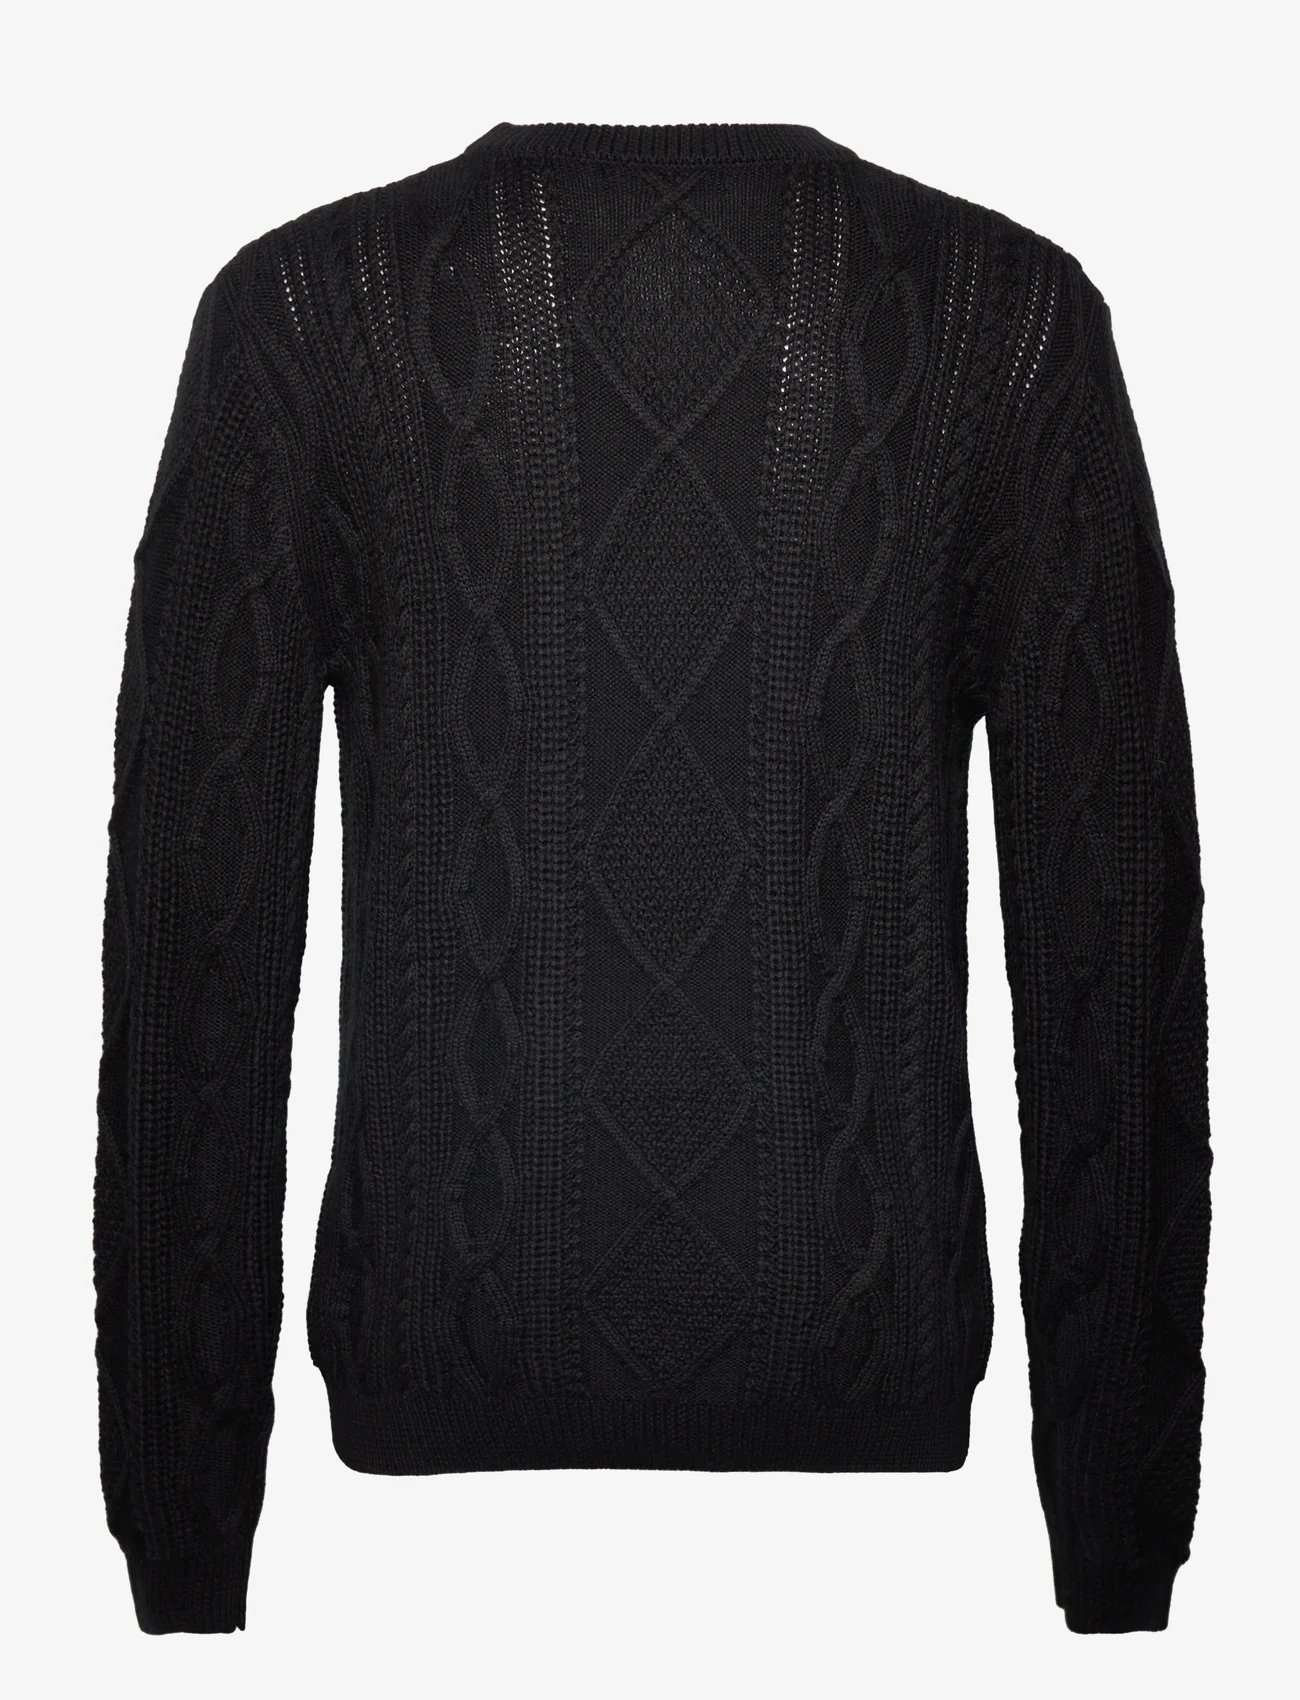 Bruuns Bazaar - RaymondBBCable knit - rundhalsad - black - 1